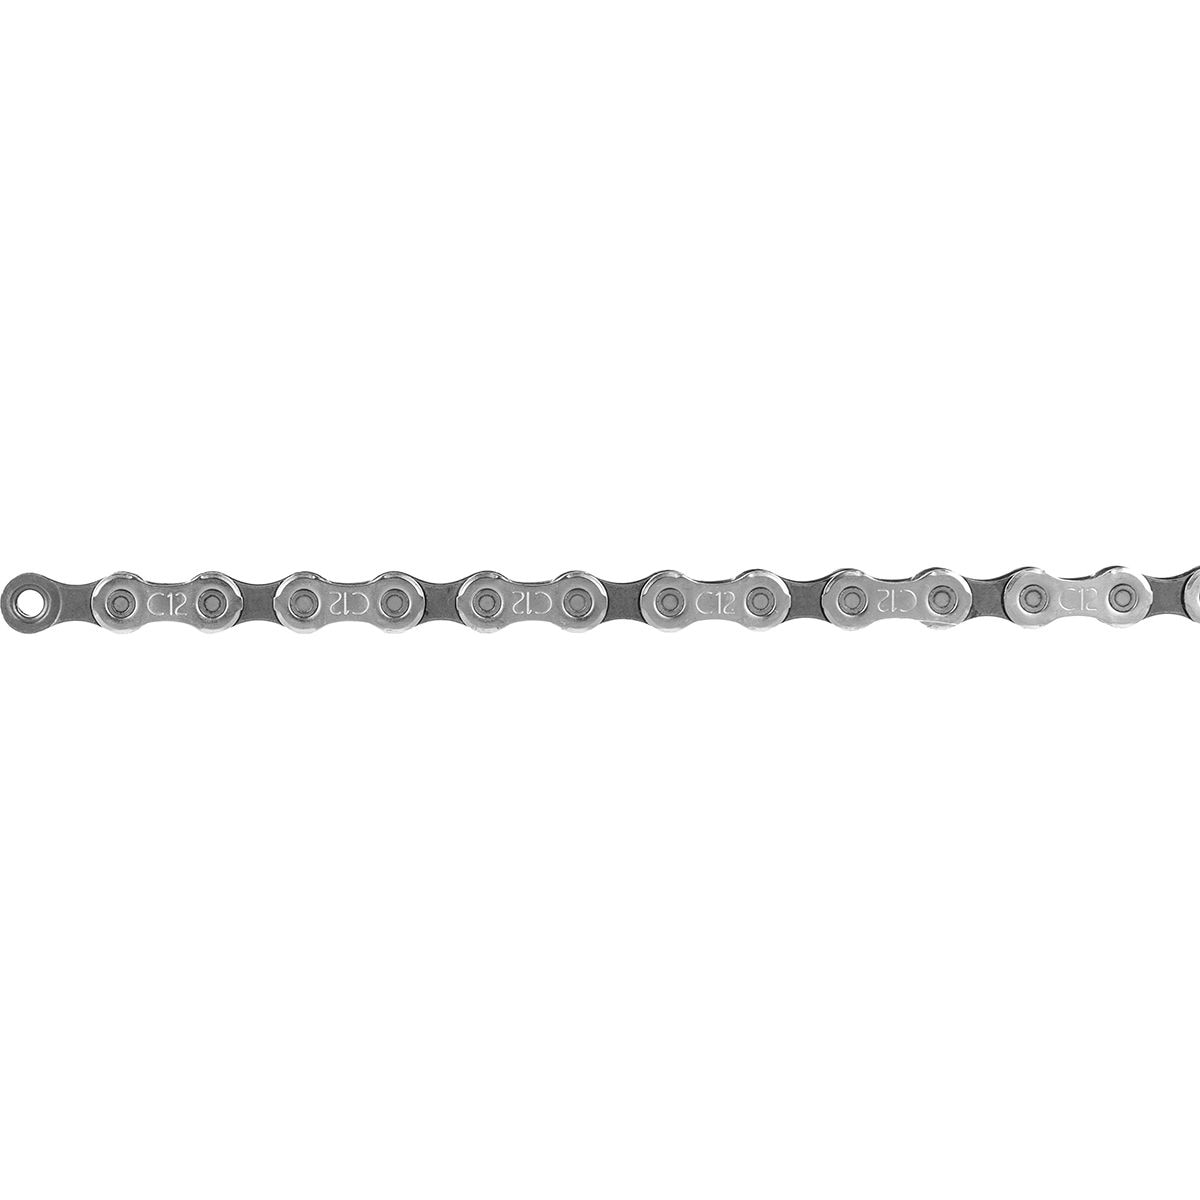 Campagnolo Chorus 12 Chain Silver, 110 Links